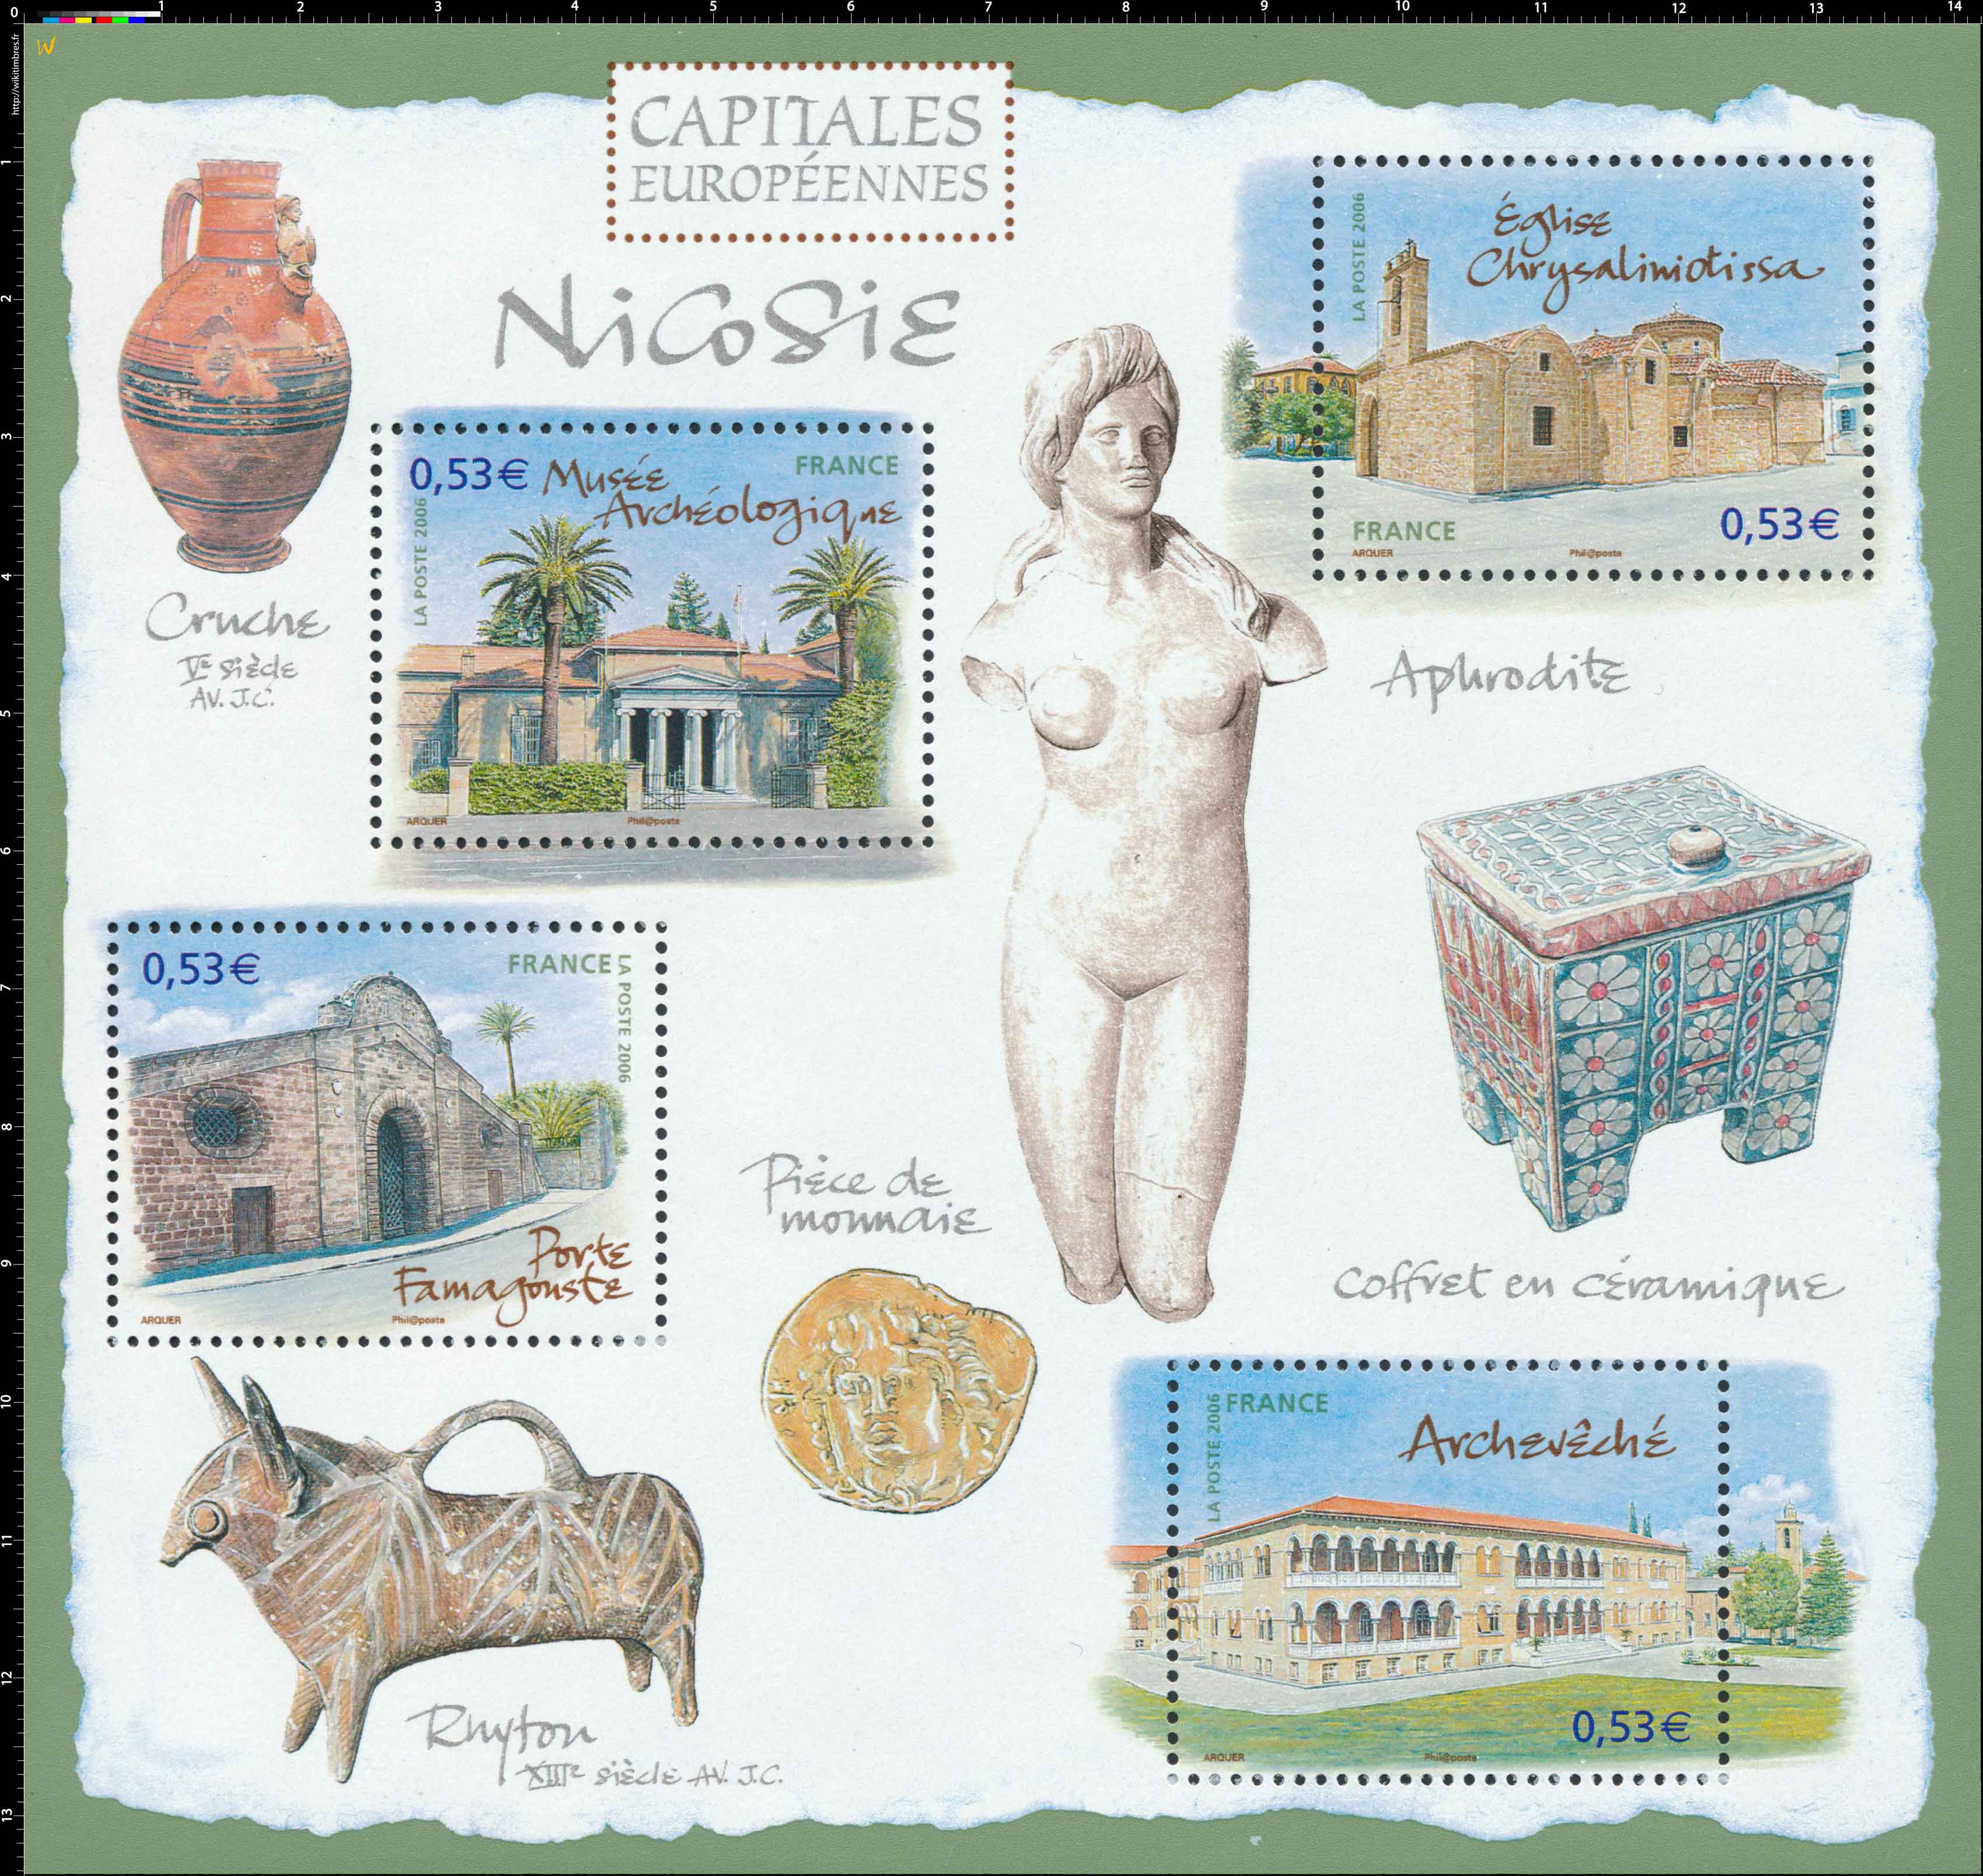 2006 CAPITALES EUROPÉENNES Nicosie